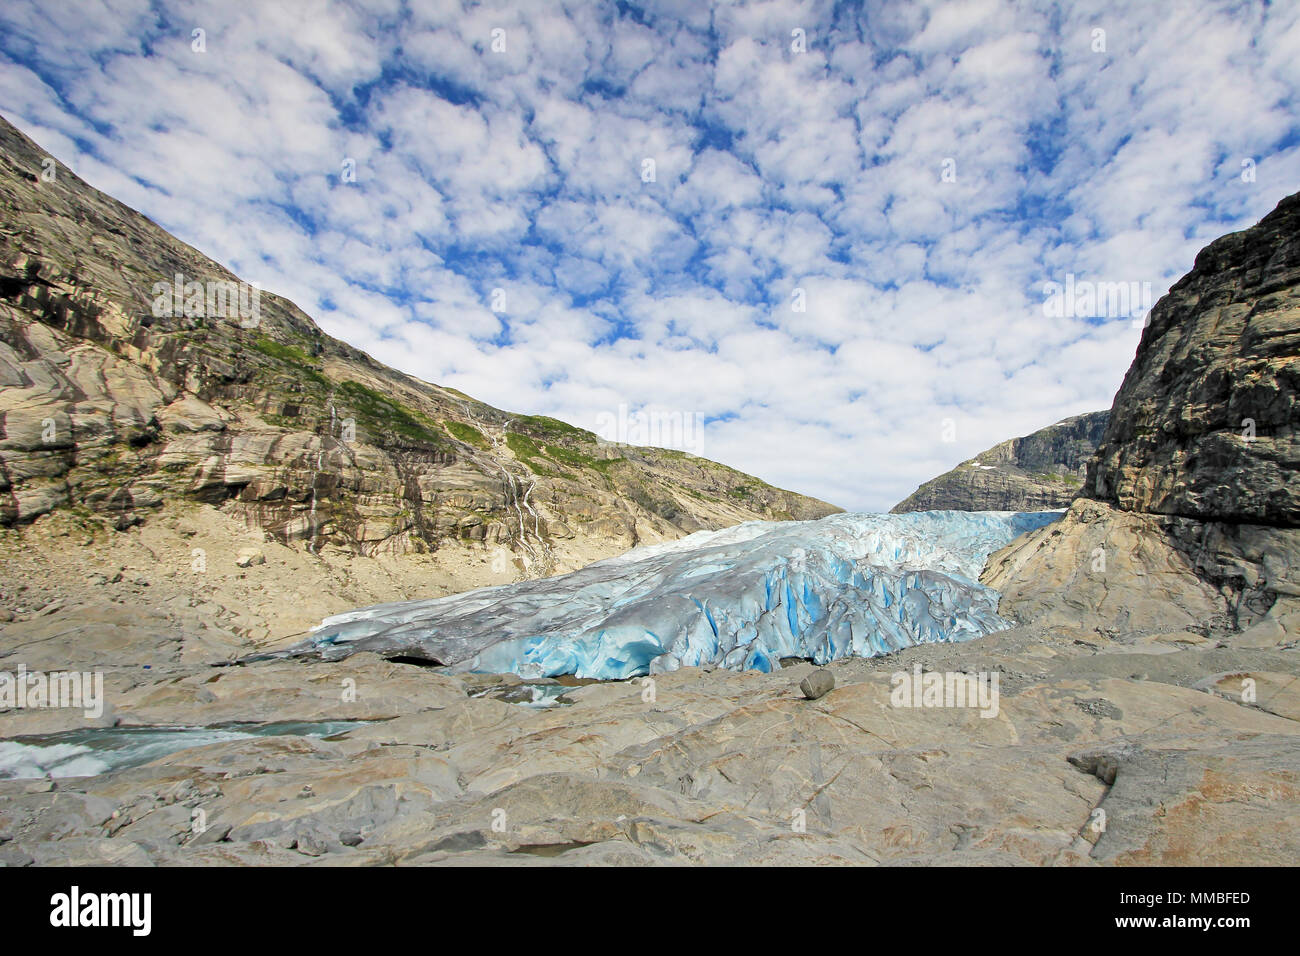 Glacier Nigardsbreen, une belle branche de l'grand glacier Jostedalsbreen, Norvège, Europe Banque D'Images